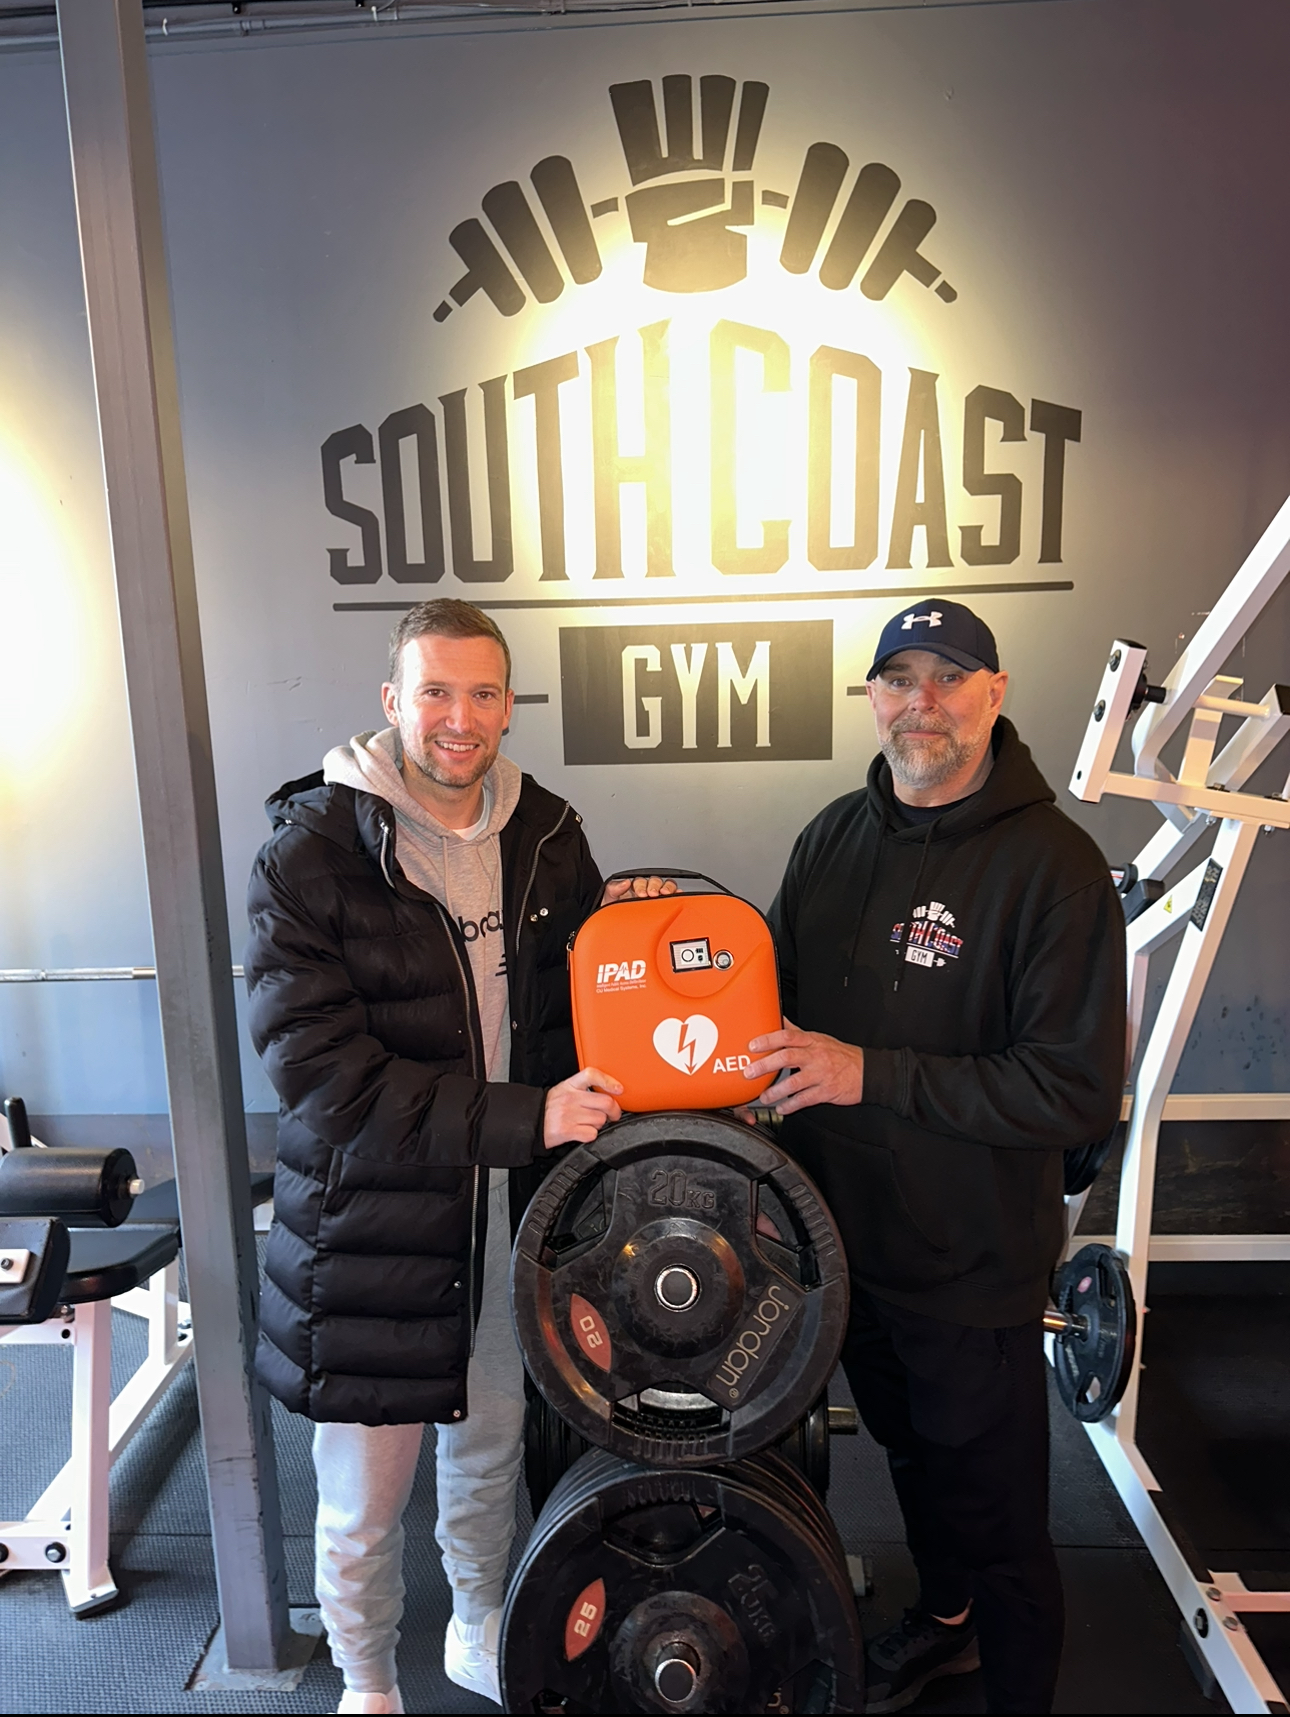 South Coast Gym is the latest JE3 defibrillator recipient